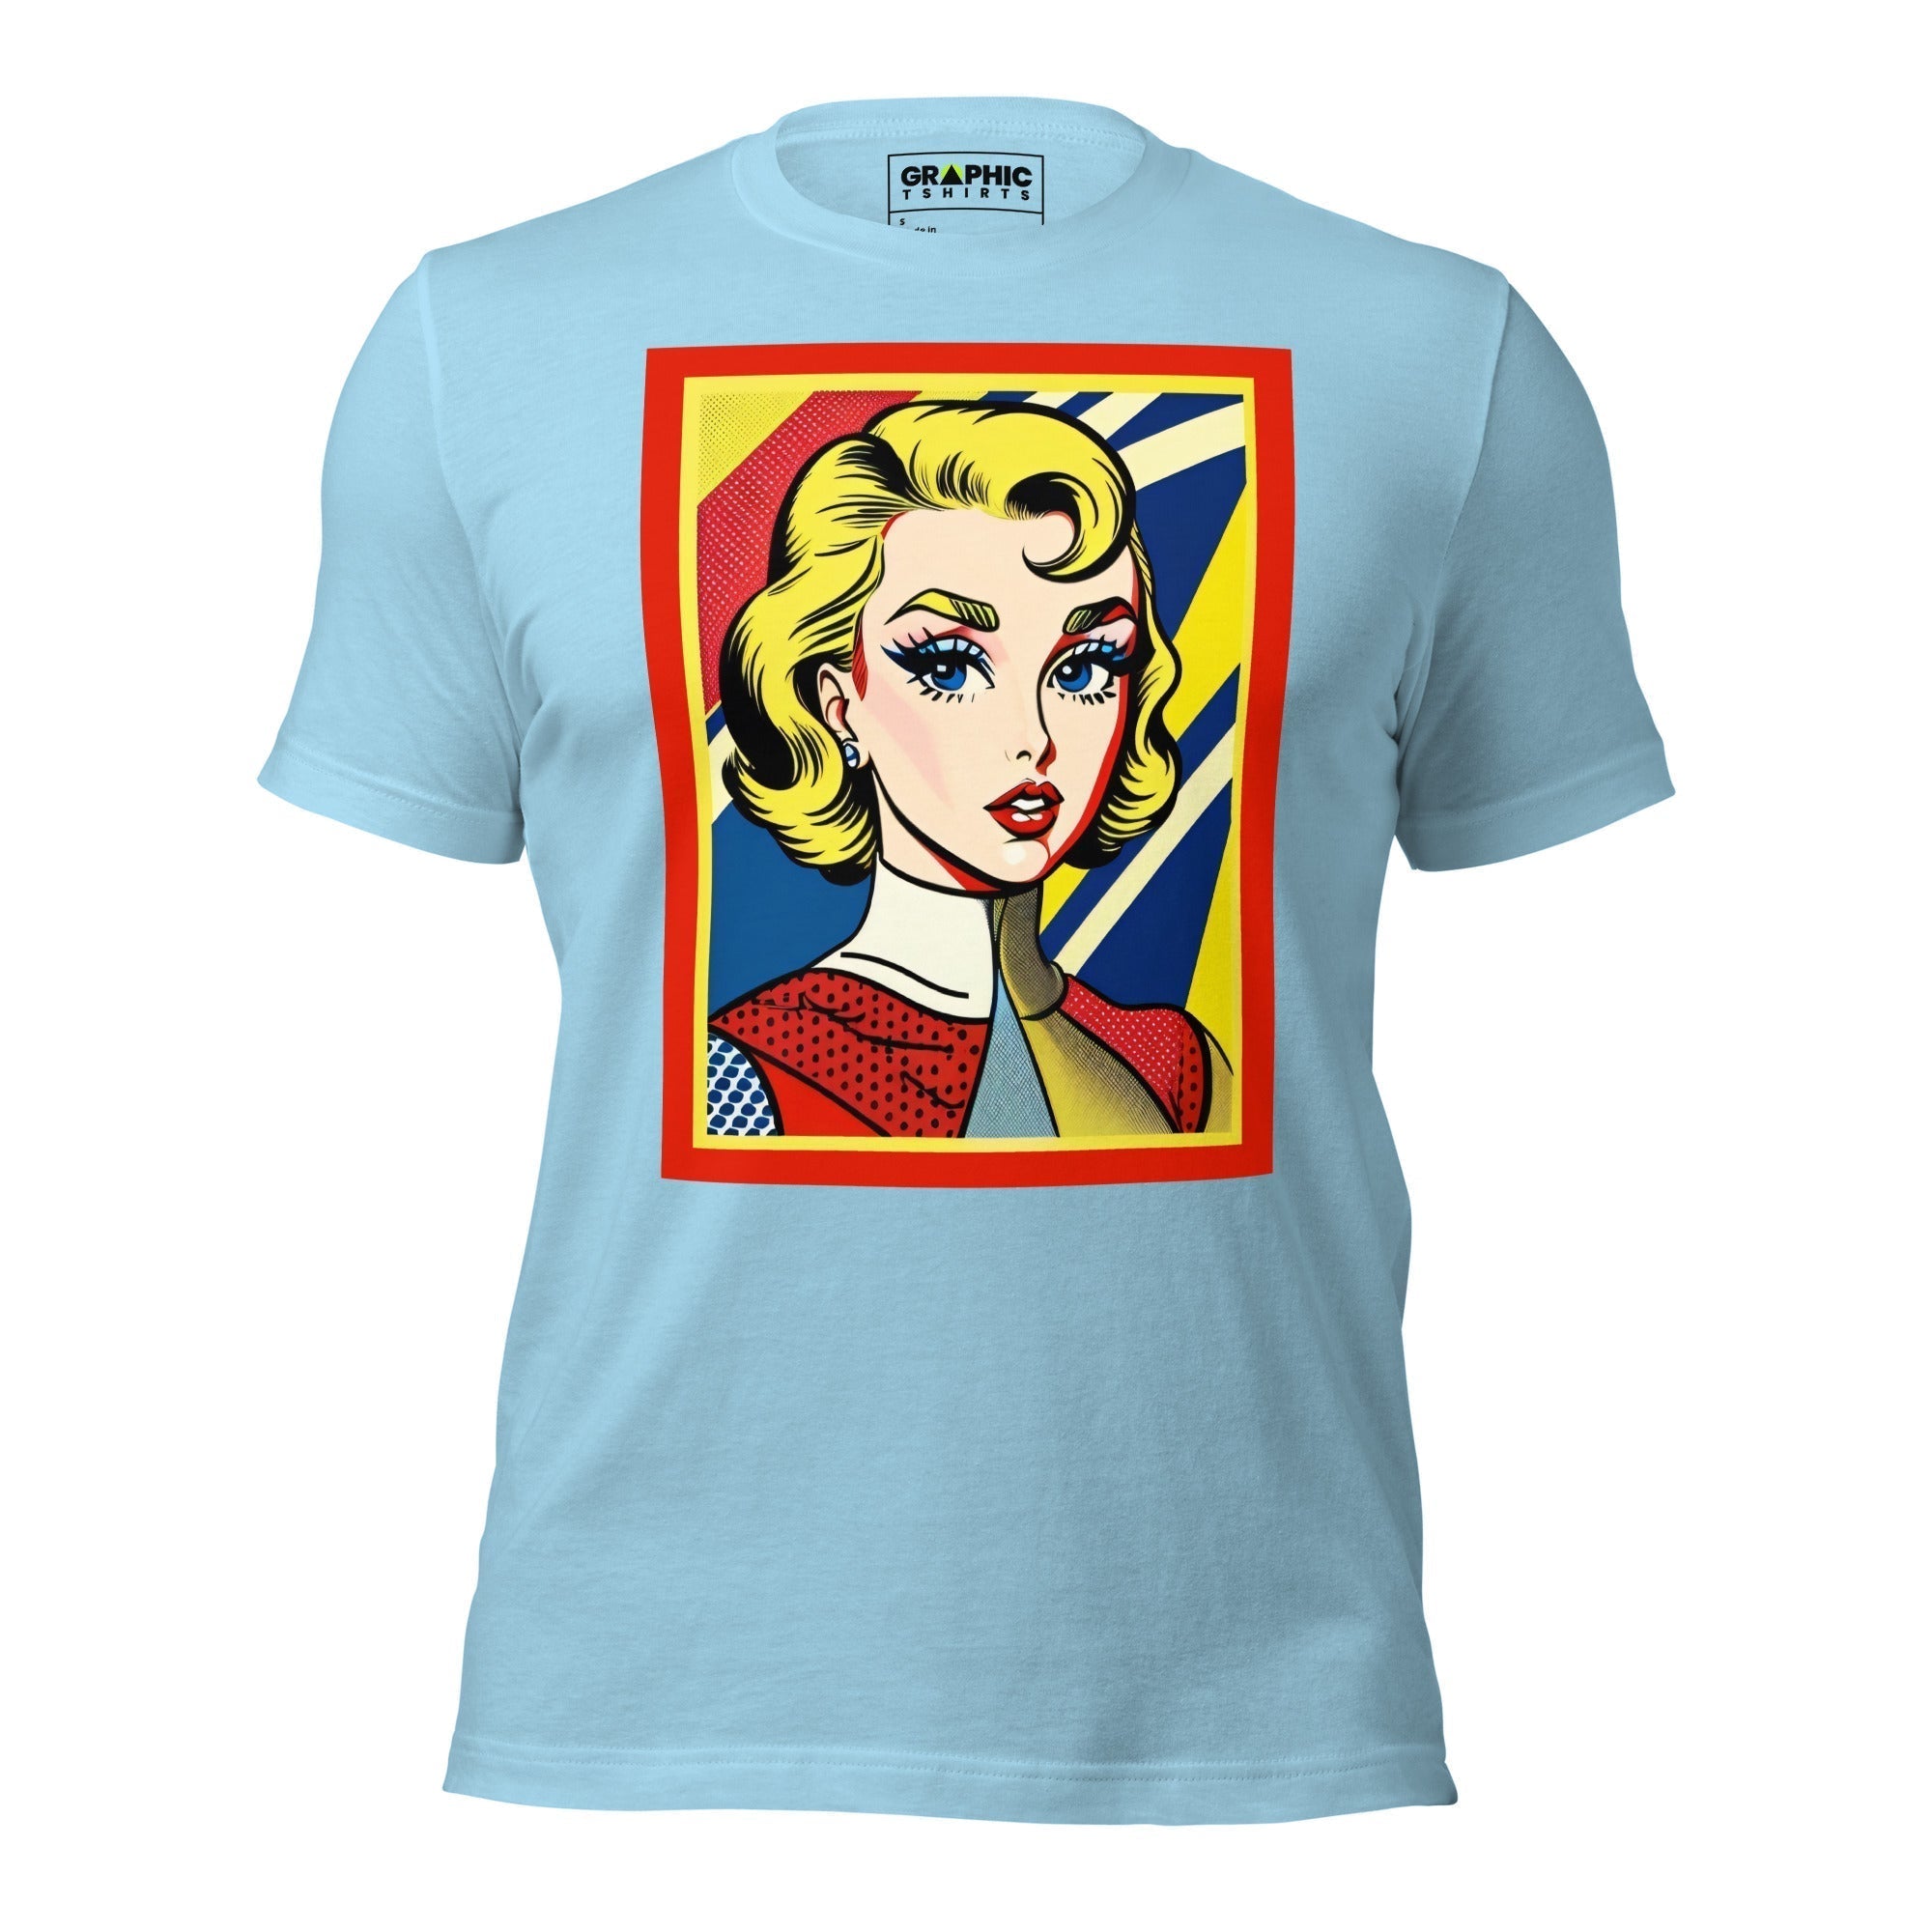 Unisex Crew Neck T-Shirt - Vintage American Comic Series v.4 - GRAPHIC T-SHIRTS